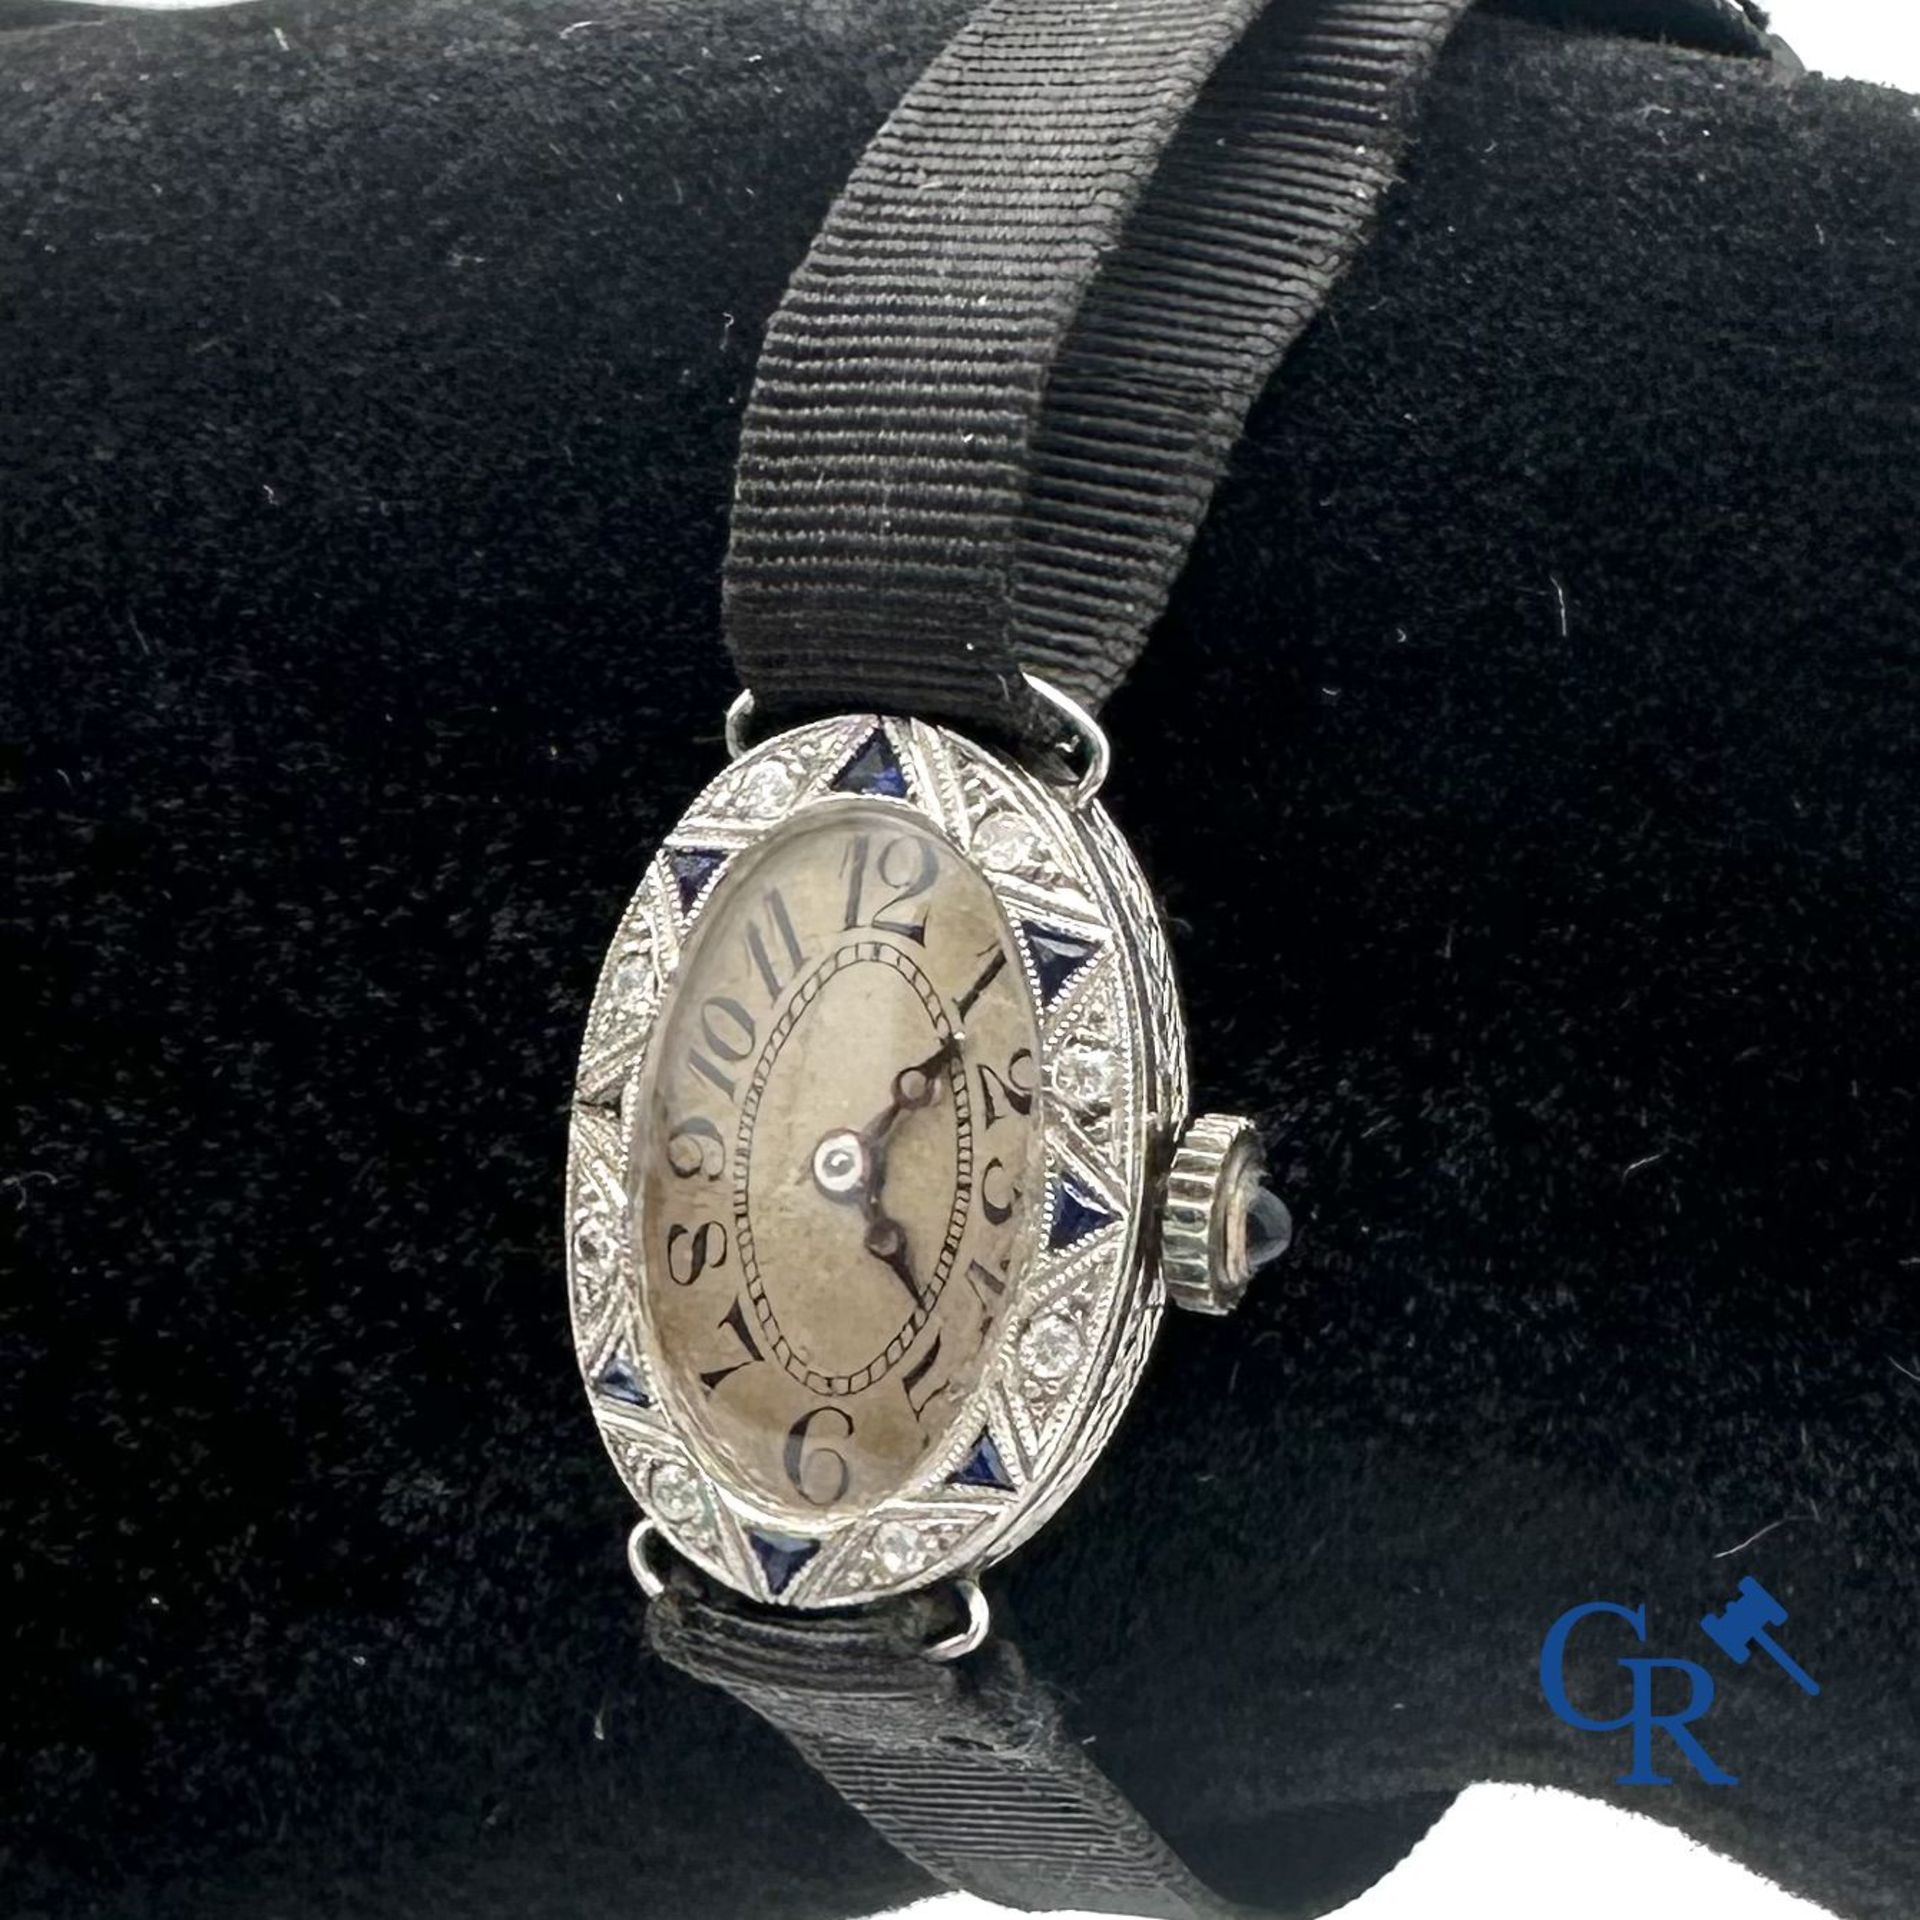 Jewellery - Timepiece: Art Deco ladies watch in Platinum. - Image 2 of 4